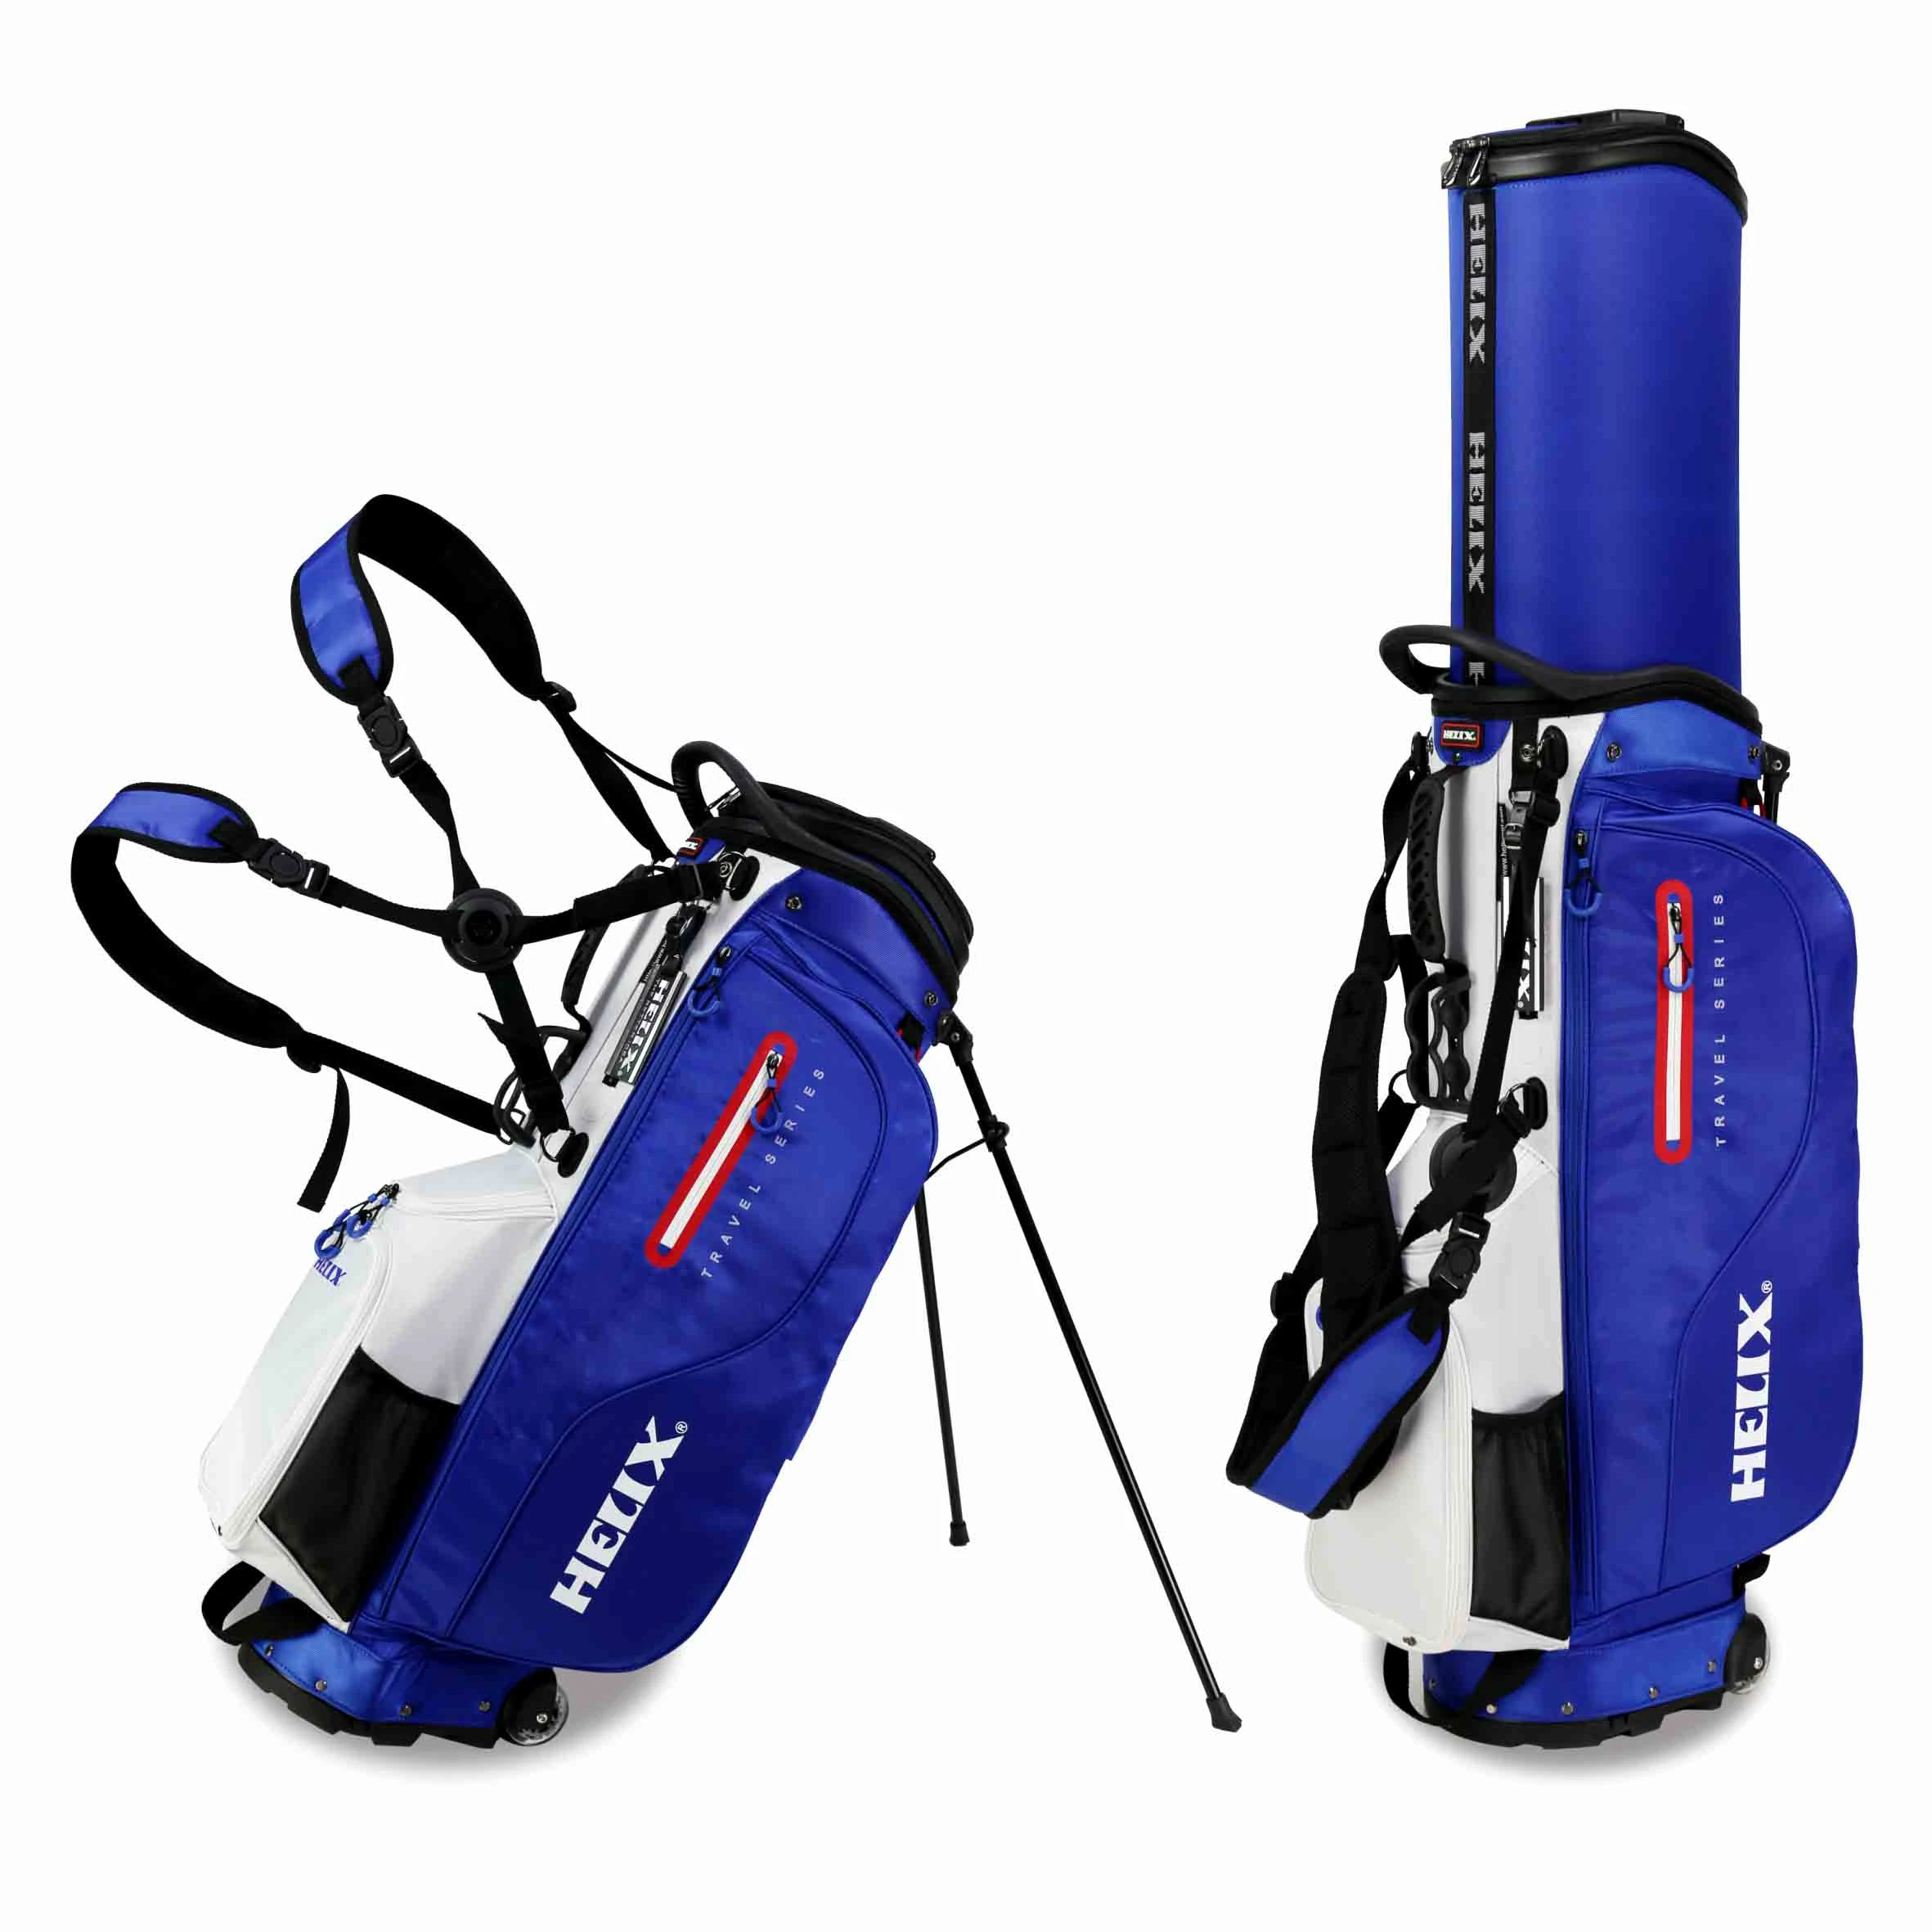 Helix golf stand bag